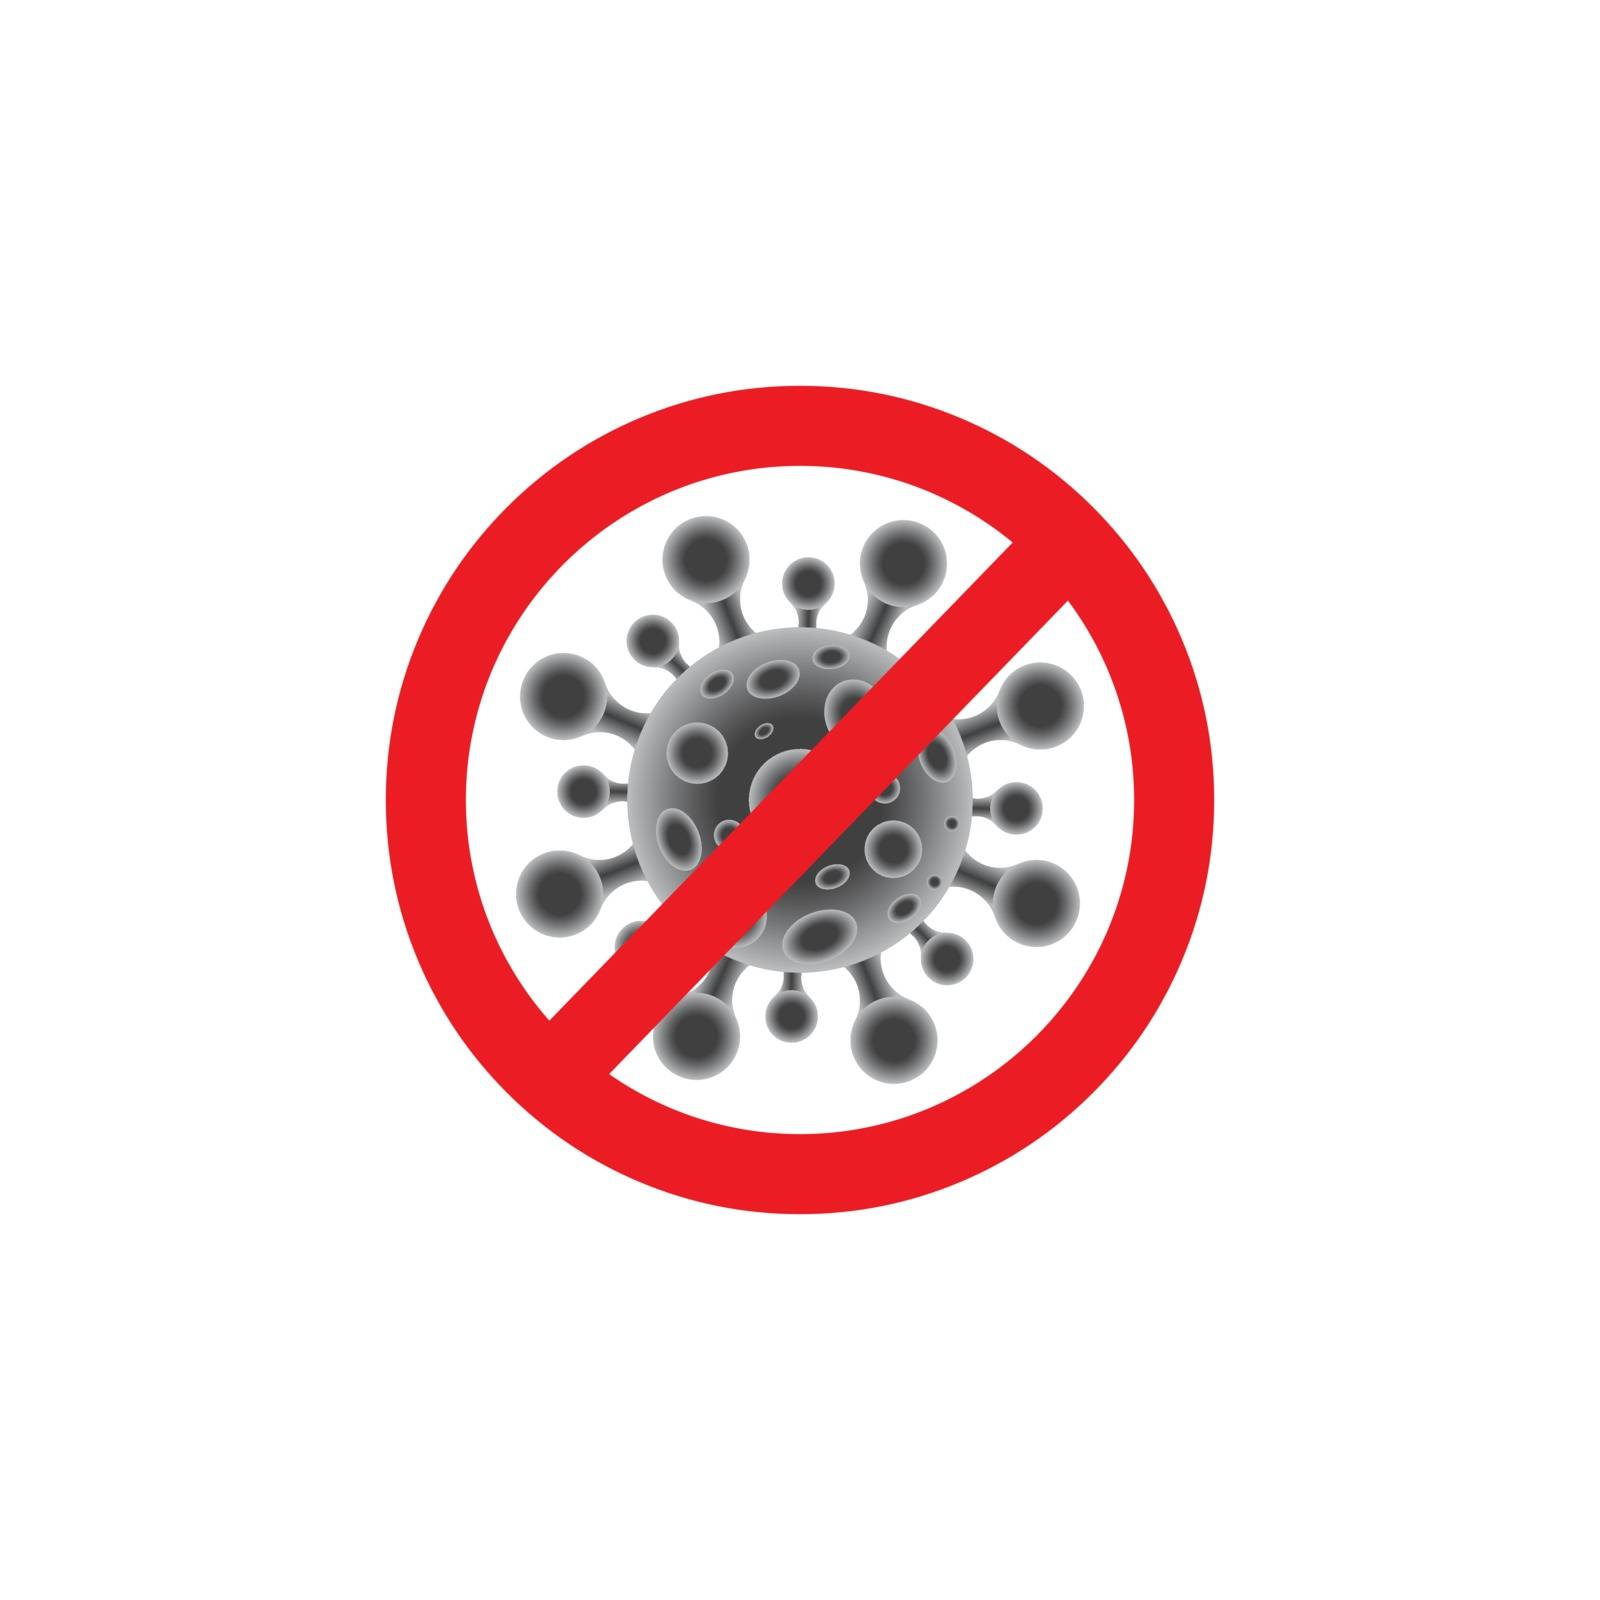 Virus corona vector illustration icon by Elaelo